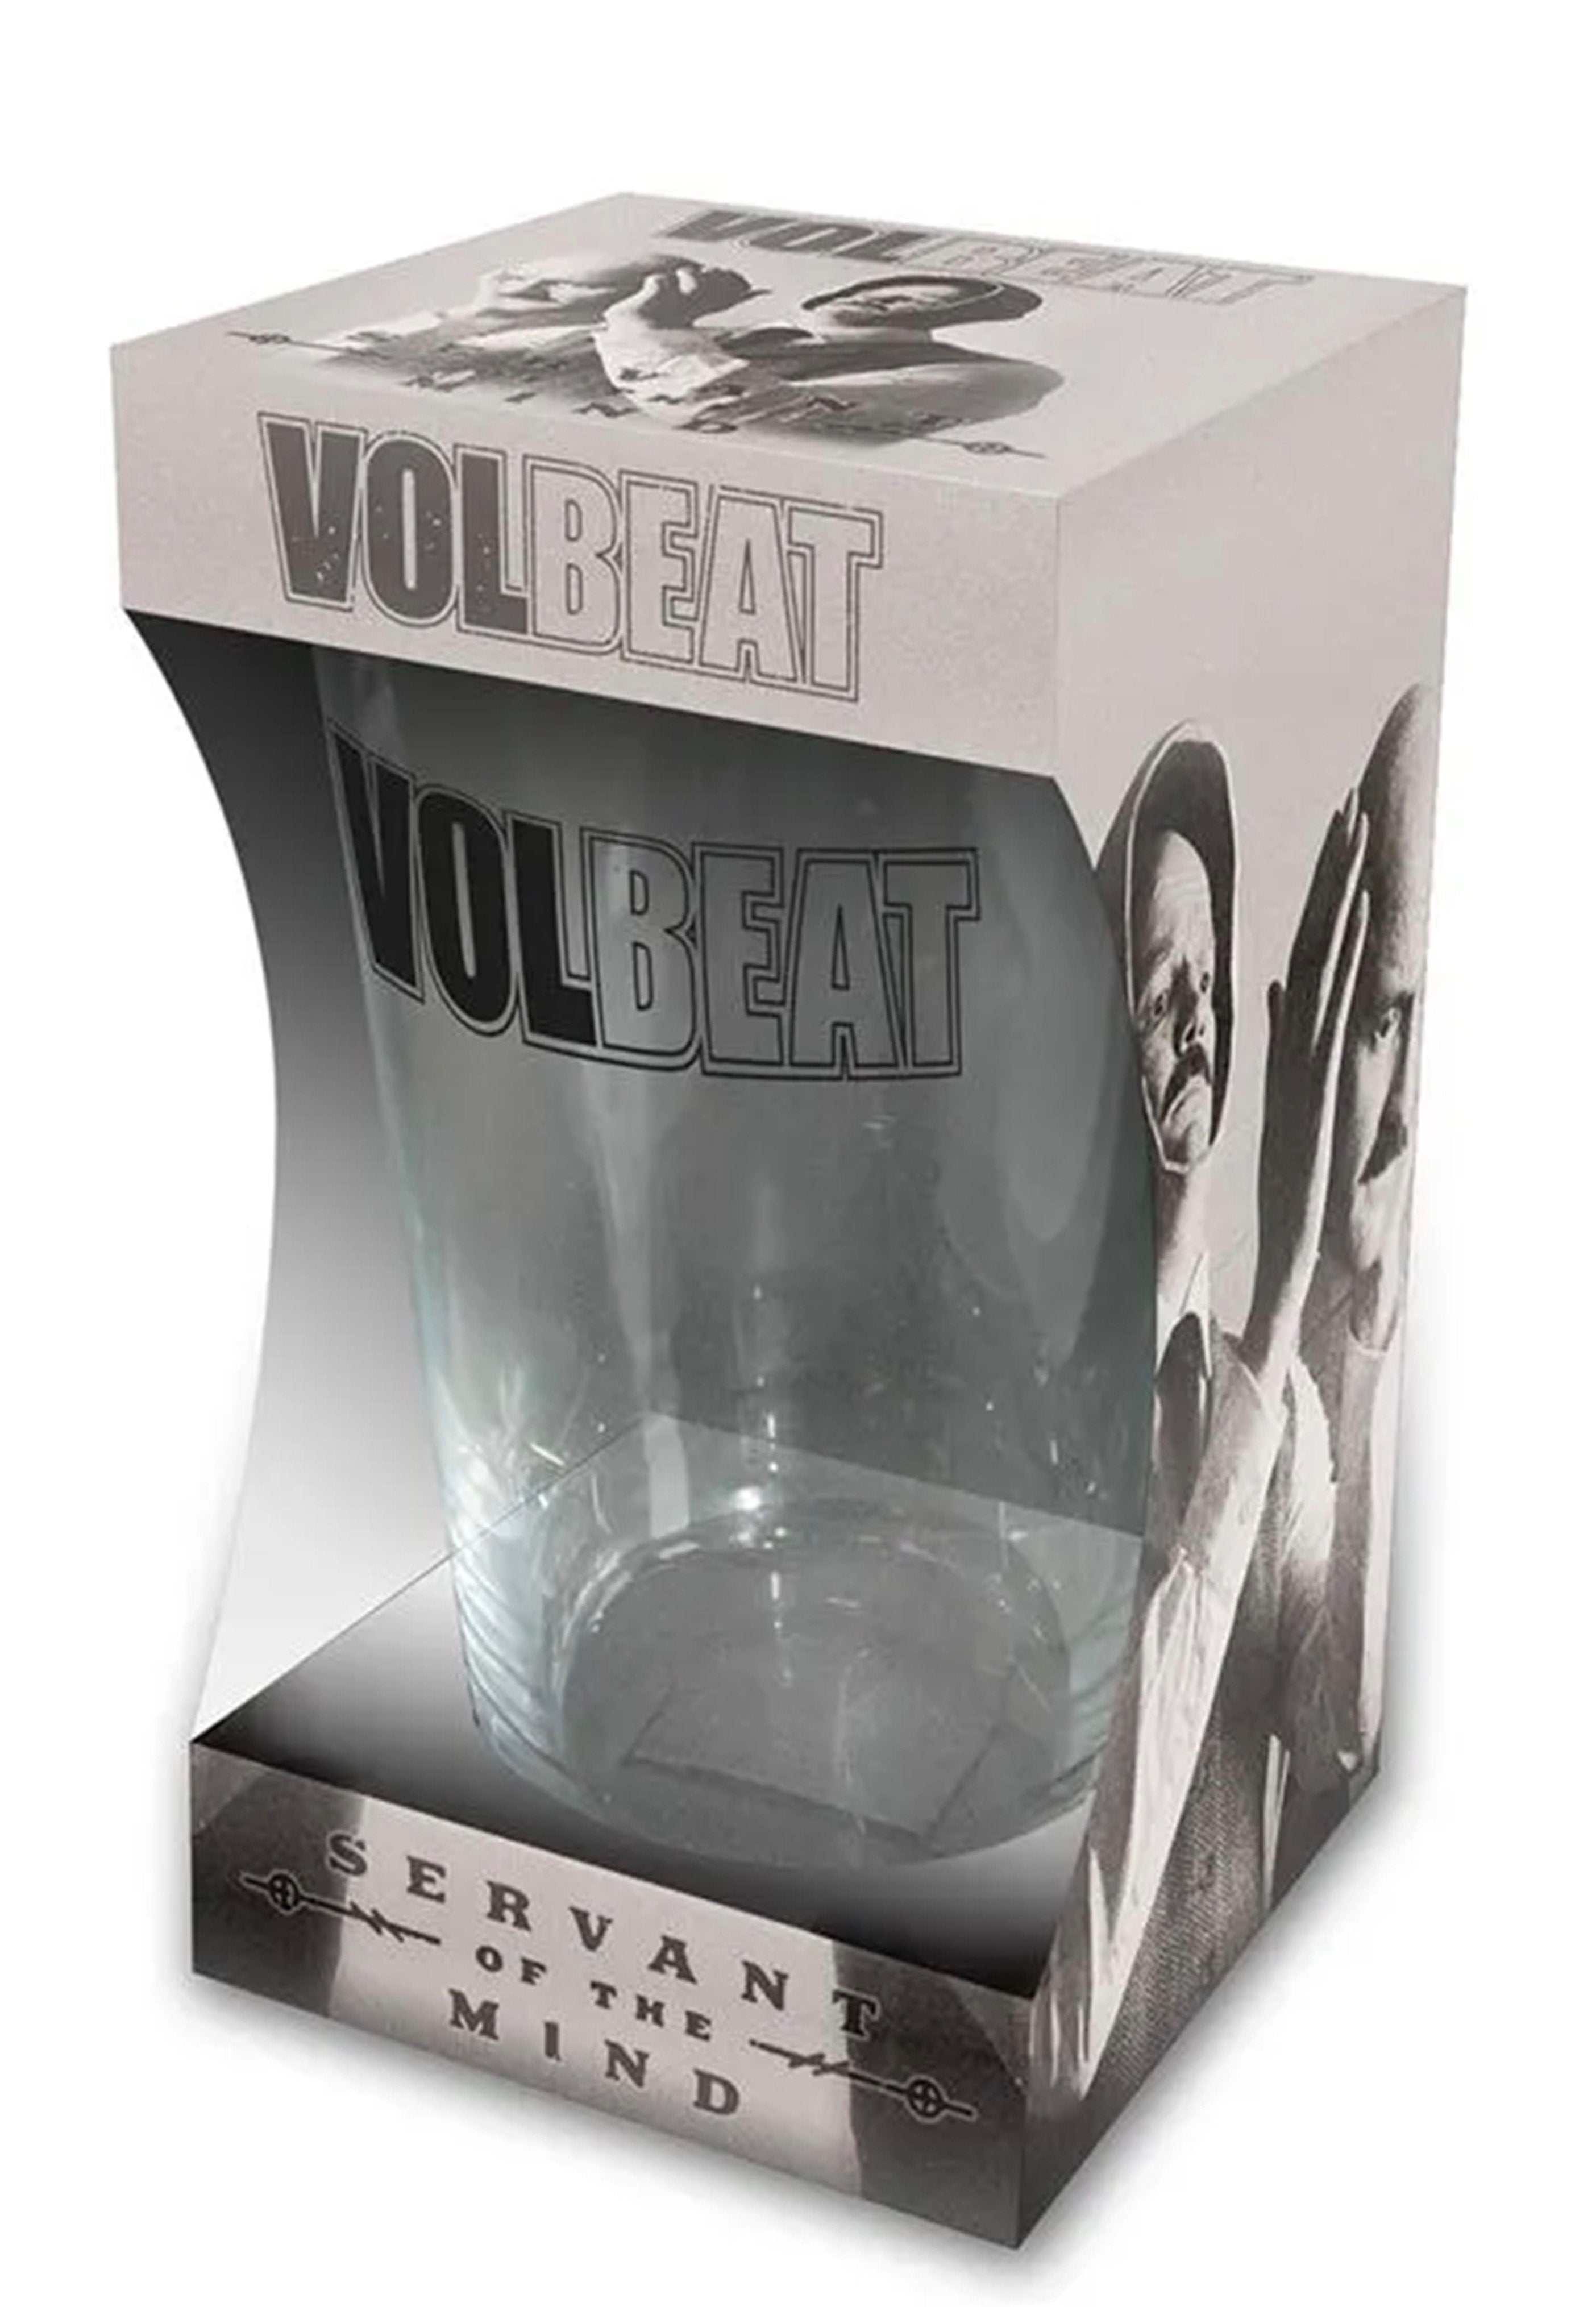 Volbeat - Servant Of The Mind - Glass